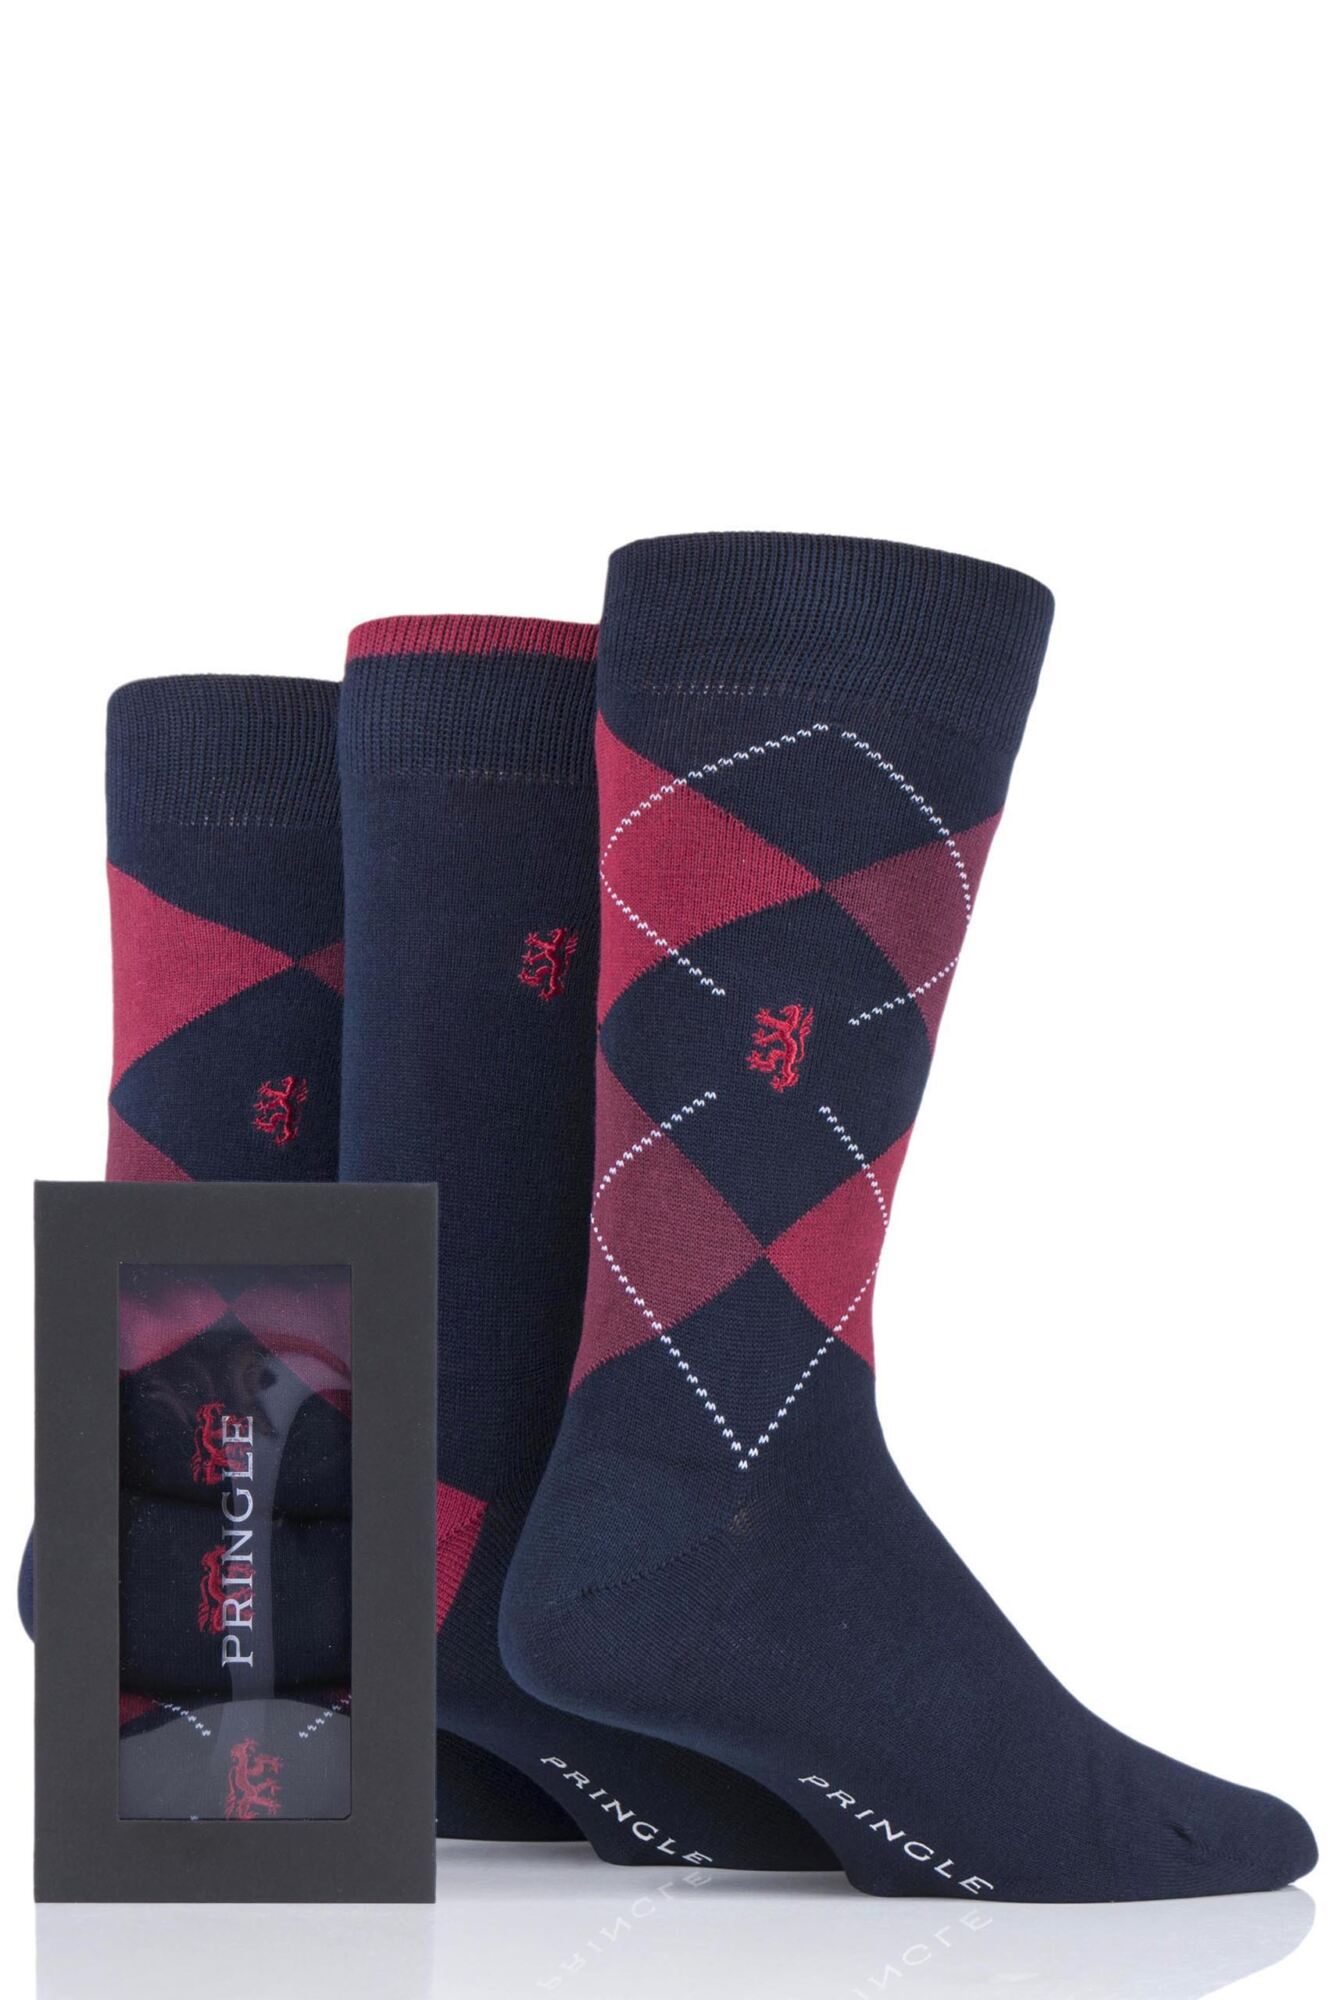 3 Pair Gift Boxed Argyle and Plain Bamboo Socks Men's - Pringle of Scotland